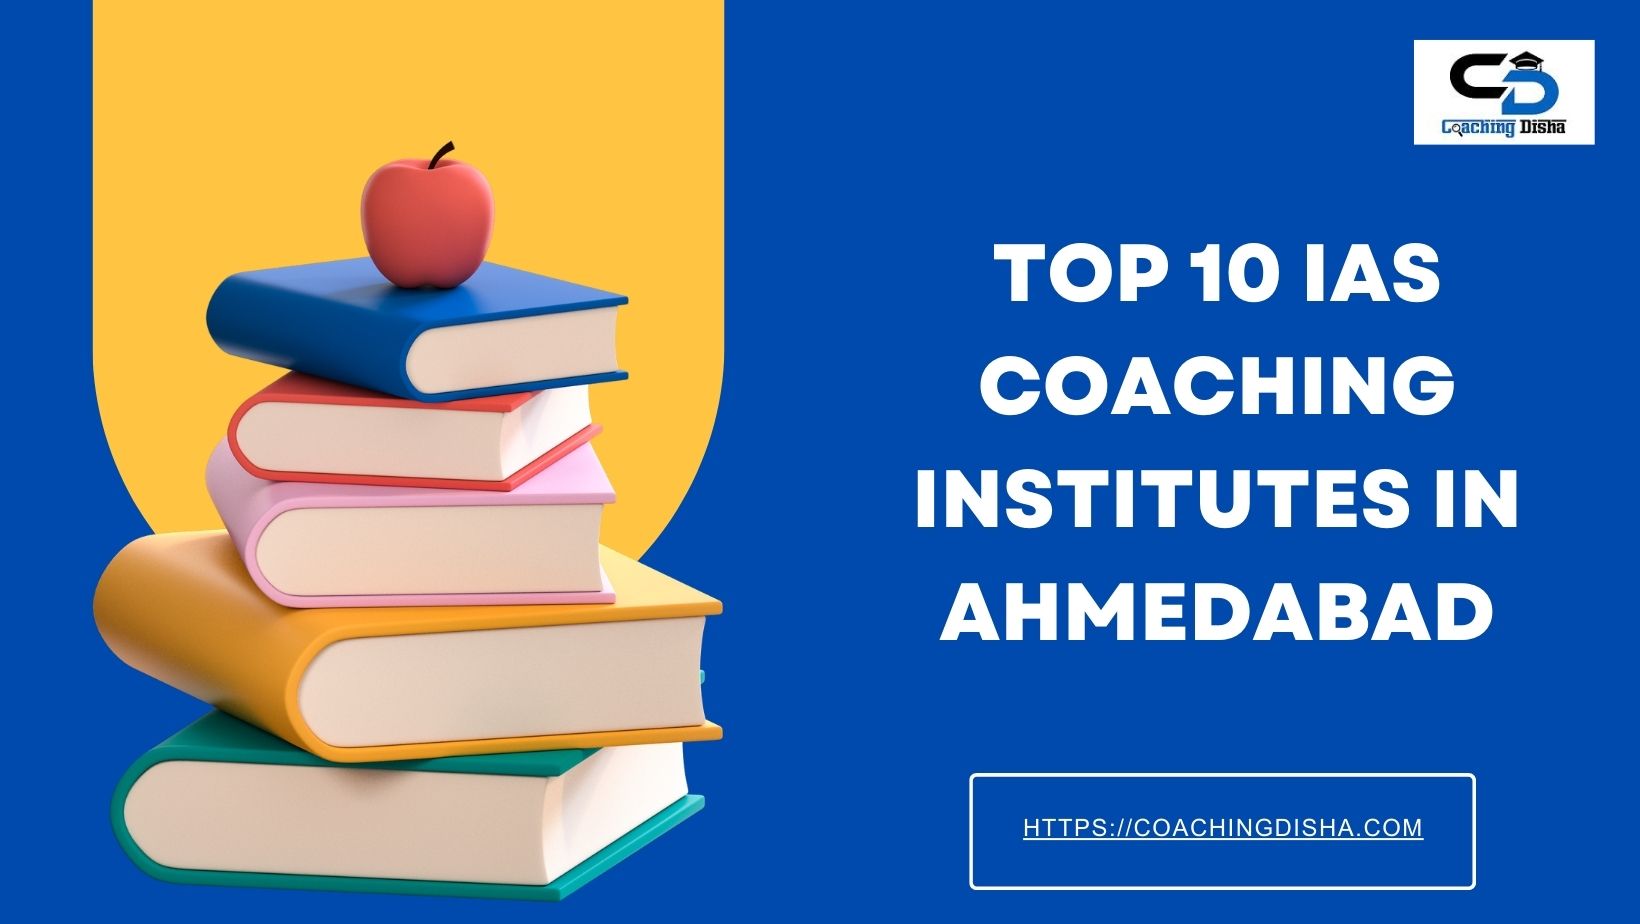 Top 10 IAS coaching institutes in Ahmedabad